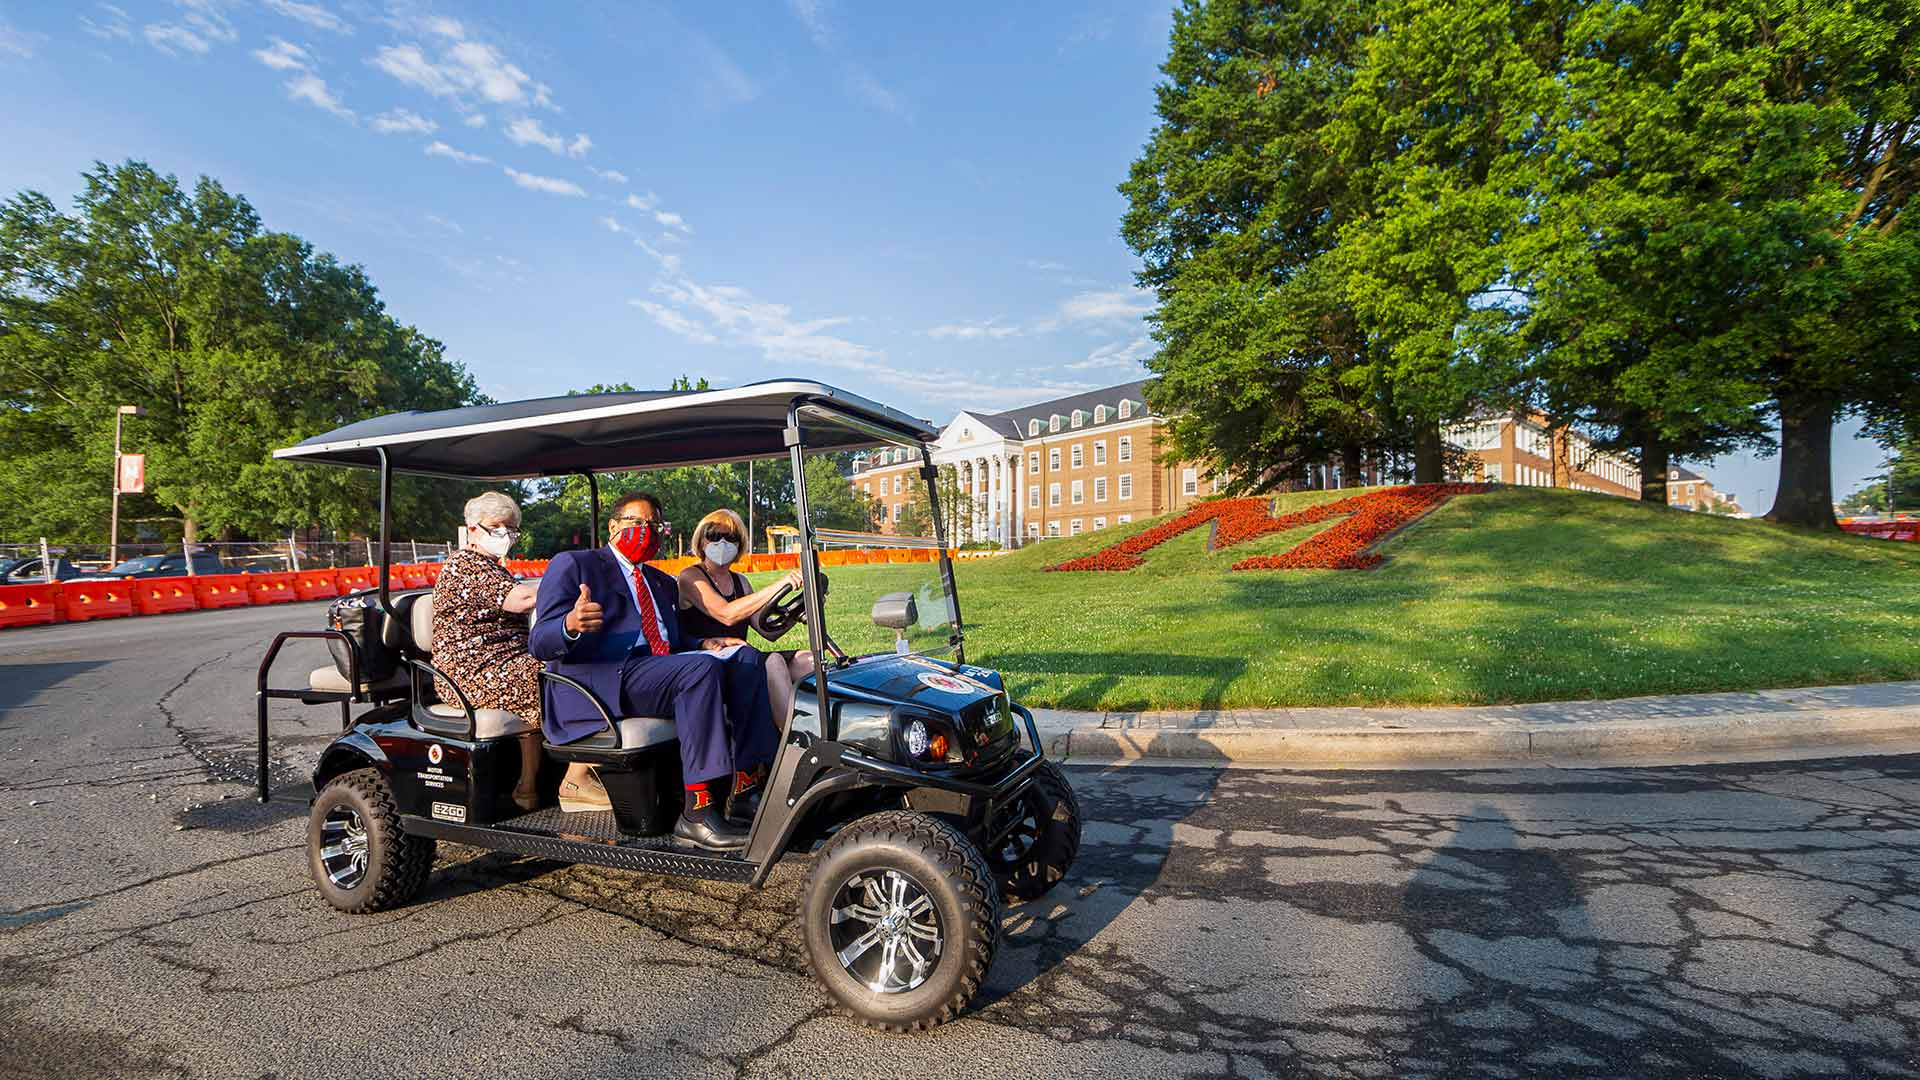 Darryll Pines rides golf cart past M